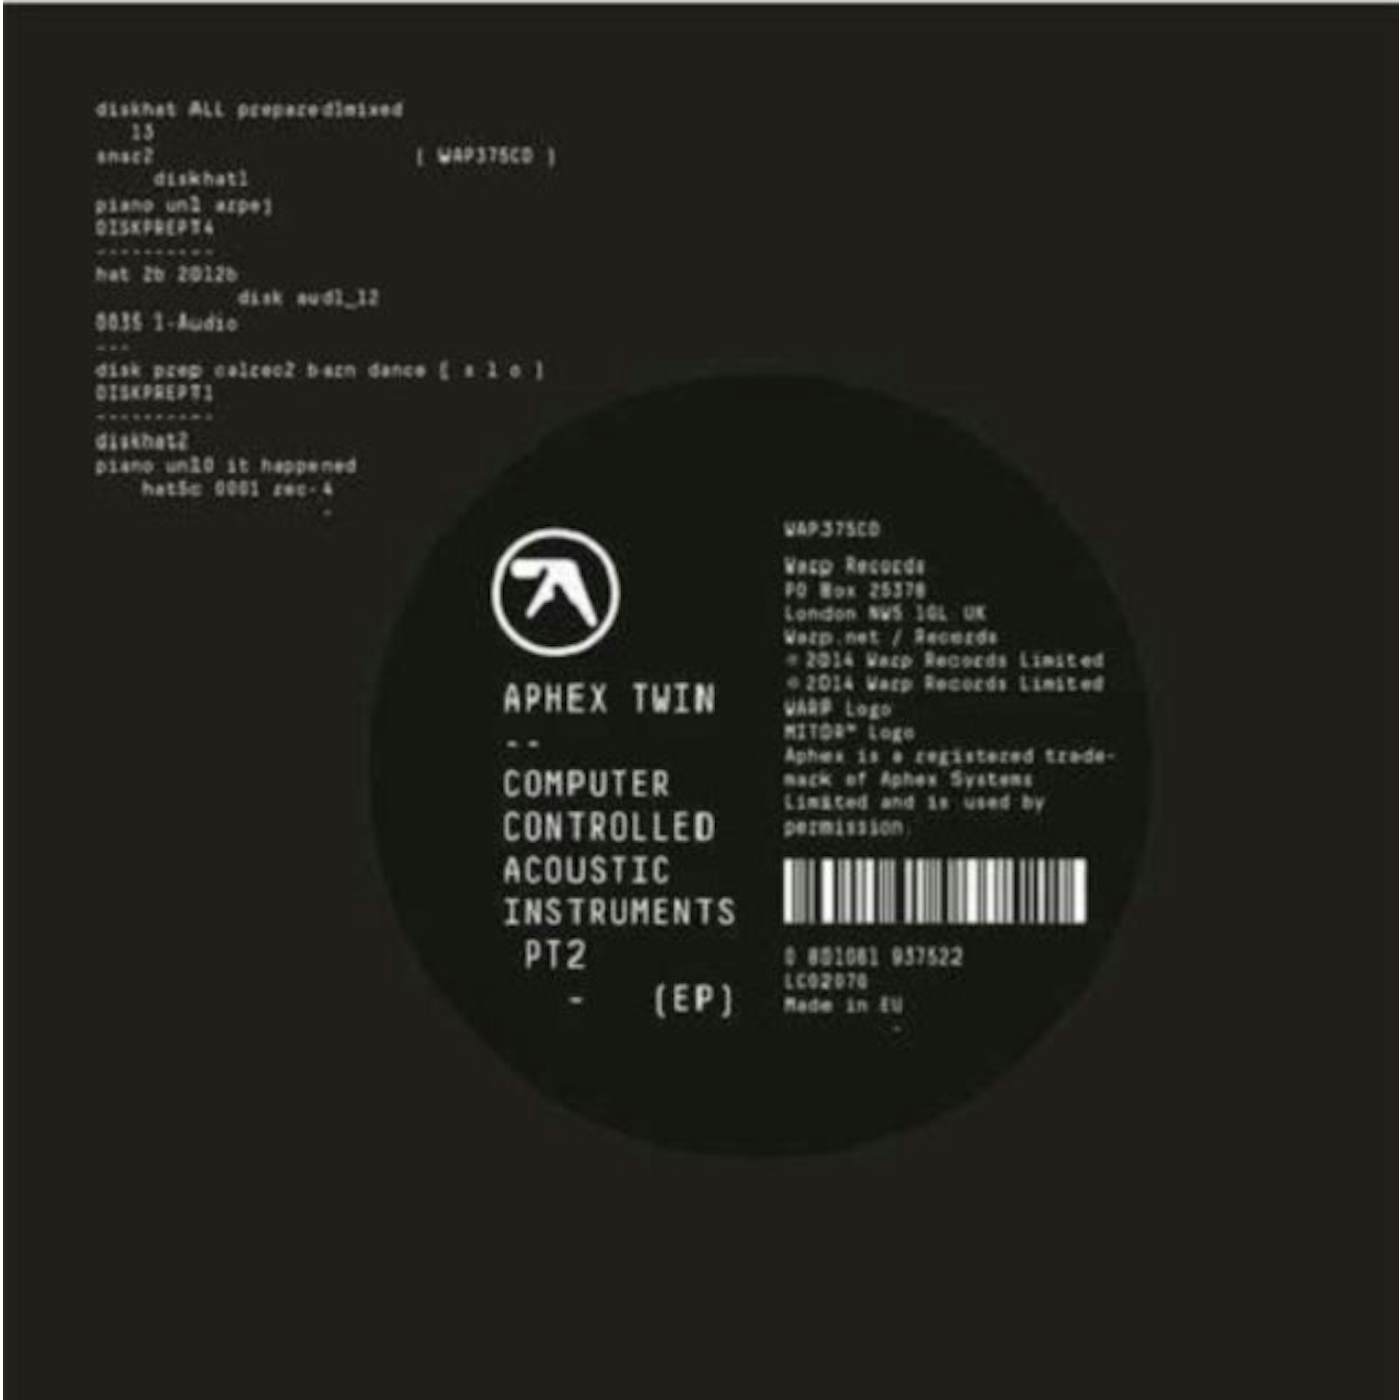 Aphex Twin LP Vinyl Record - Computer Controlled Acoustic Instruments Pt 2 Ep